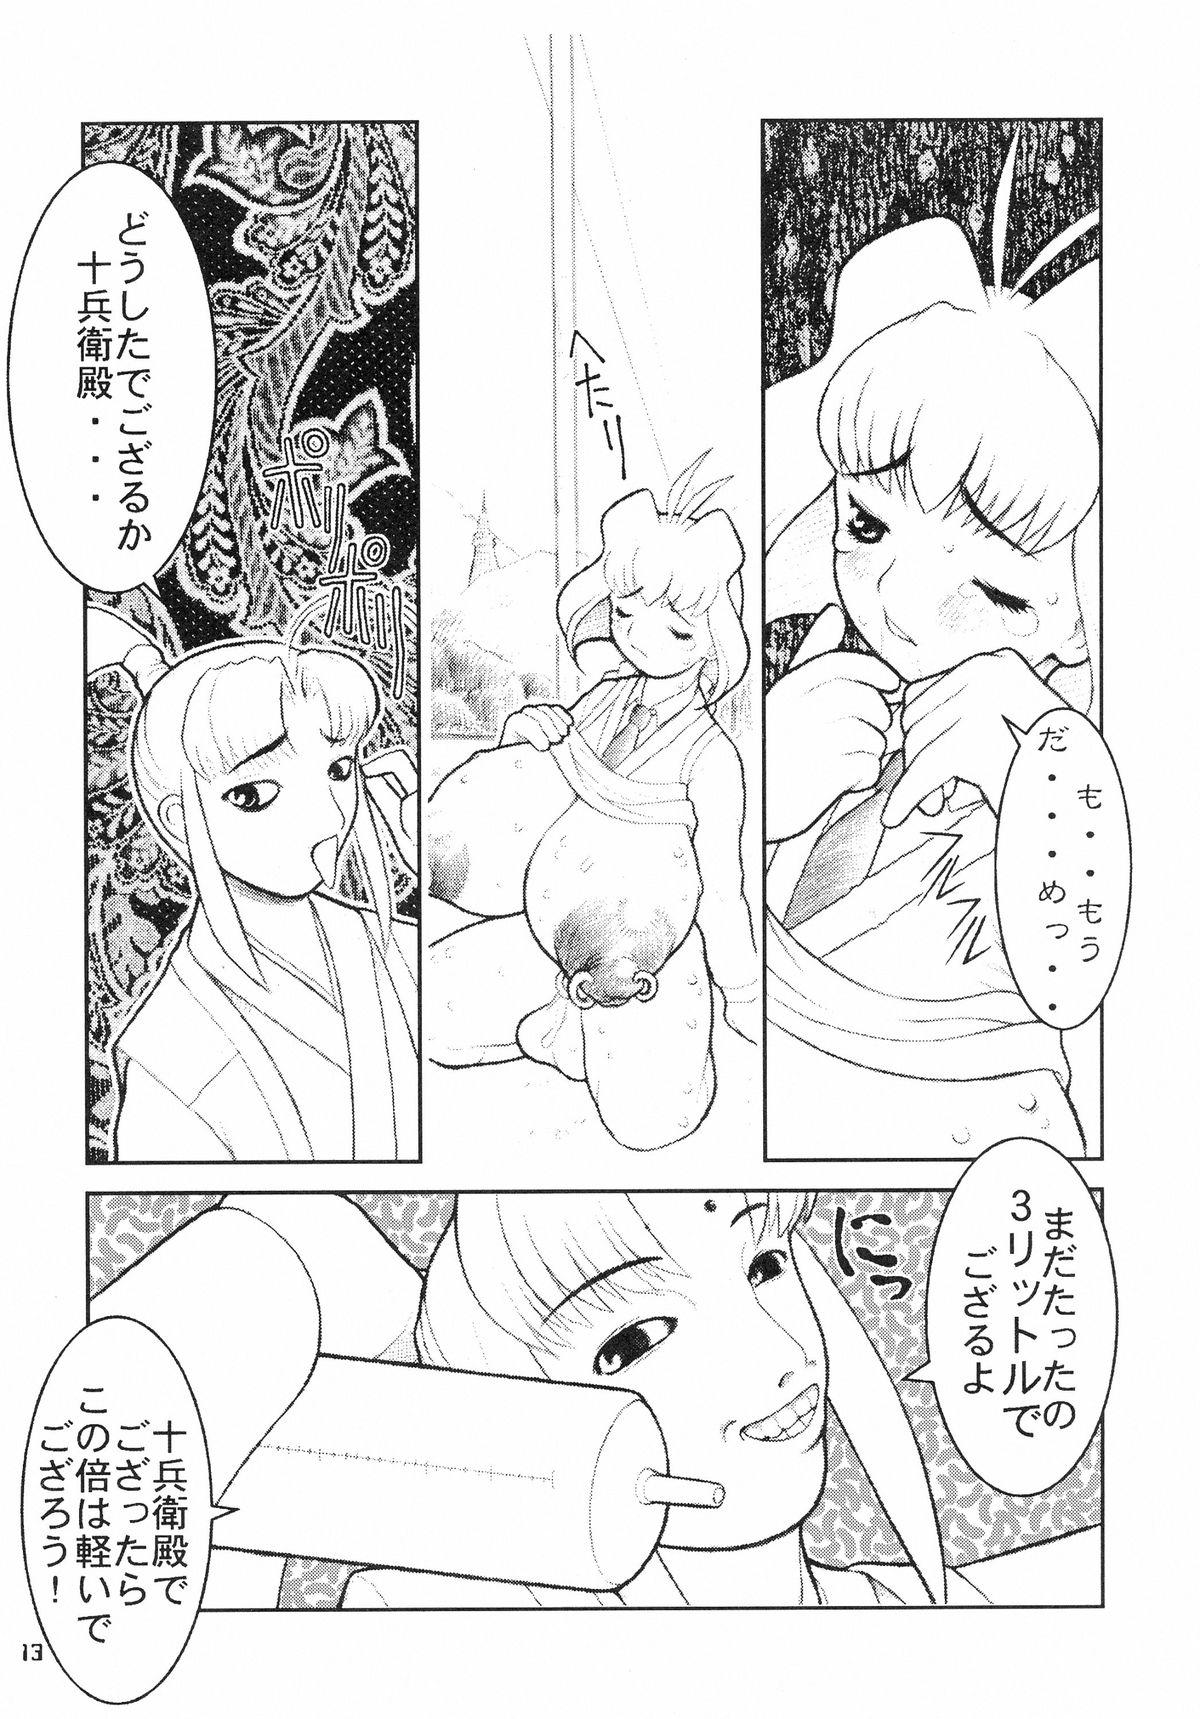 Mamada MaD ArtistS ZyuubeityanN - Jubei-chan Piercing - Page 13